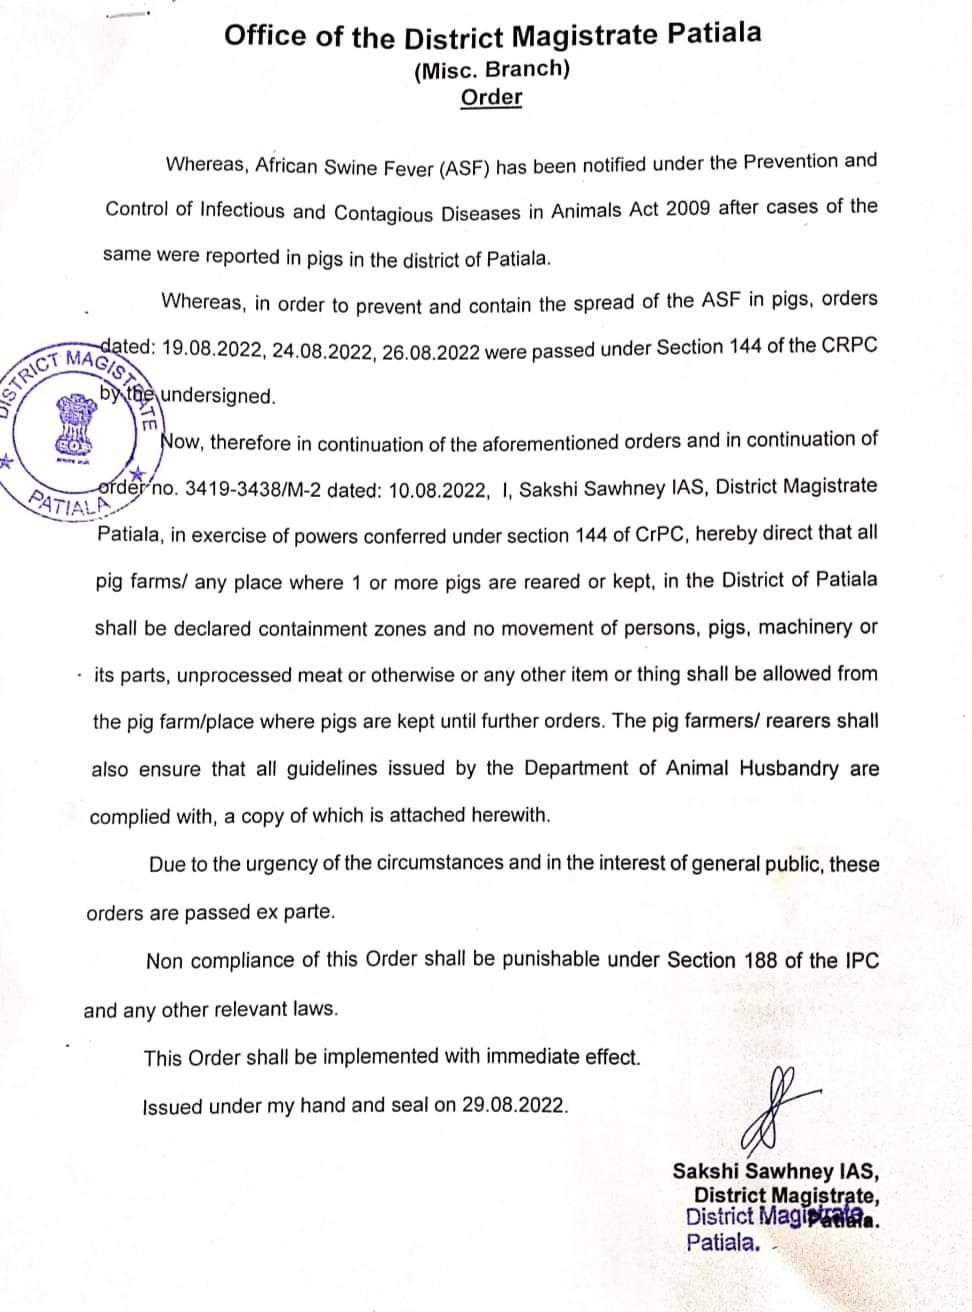 New orders by Patiala DC regarding African Swine Fever